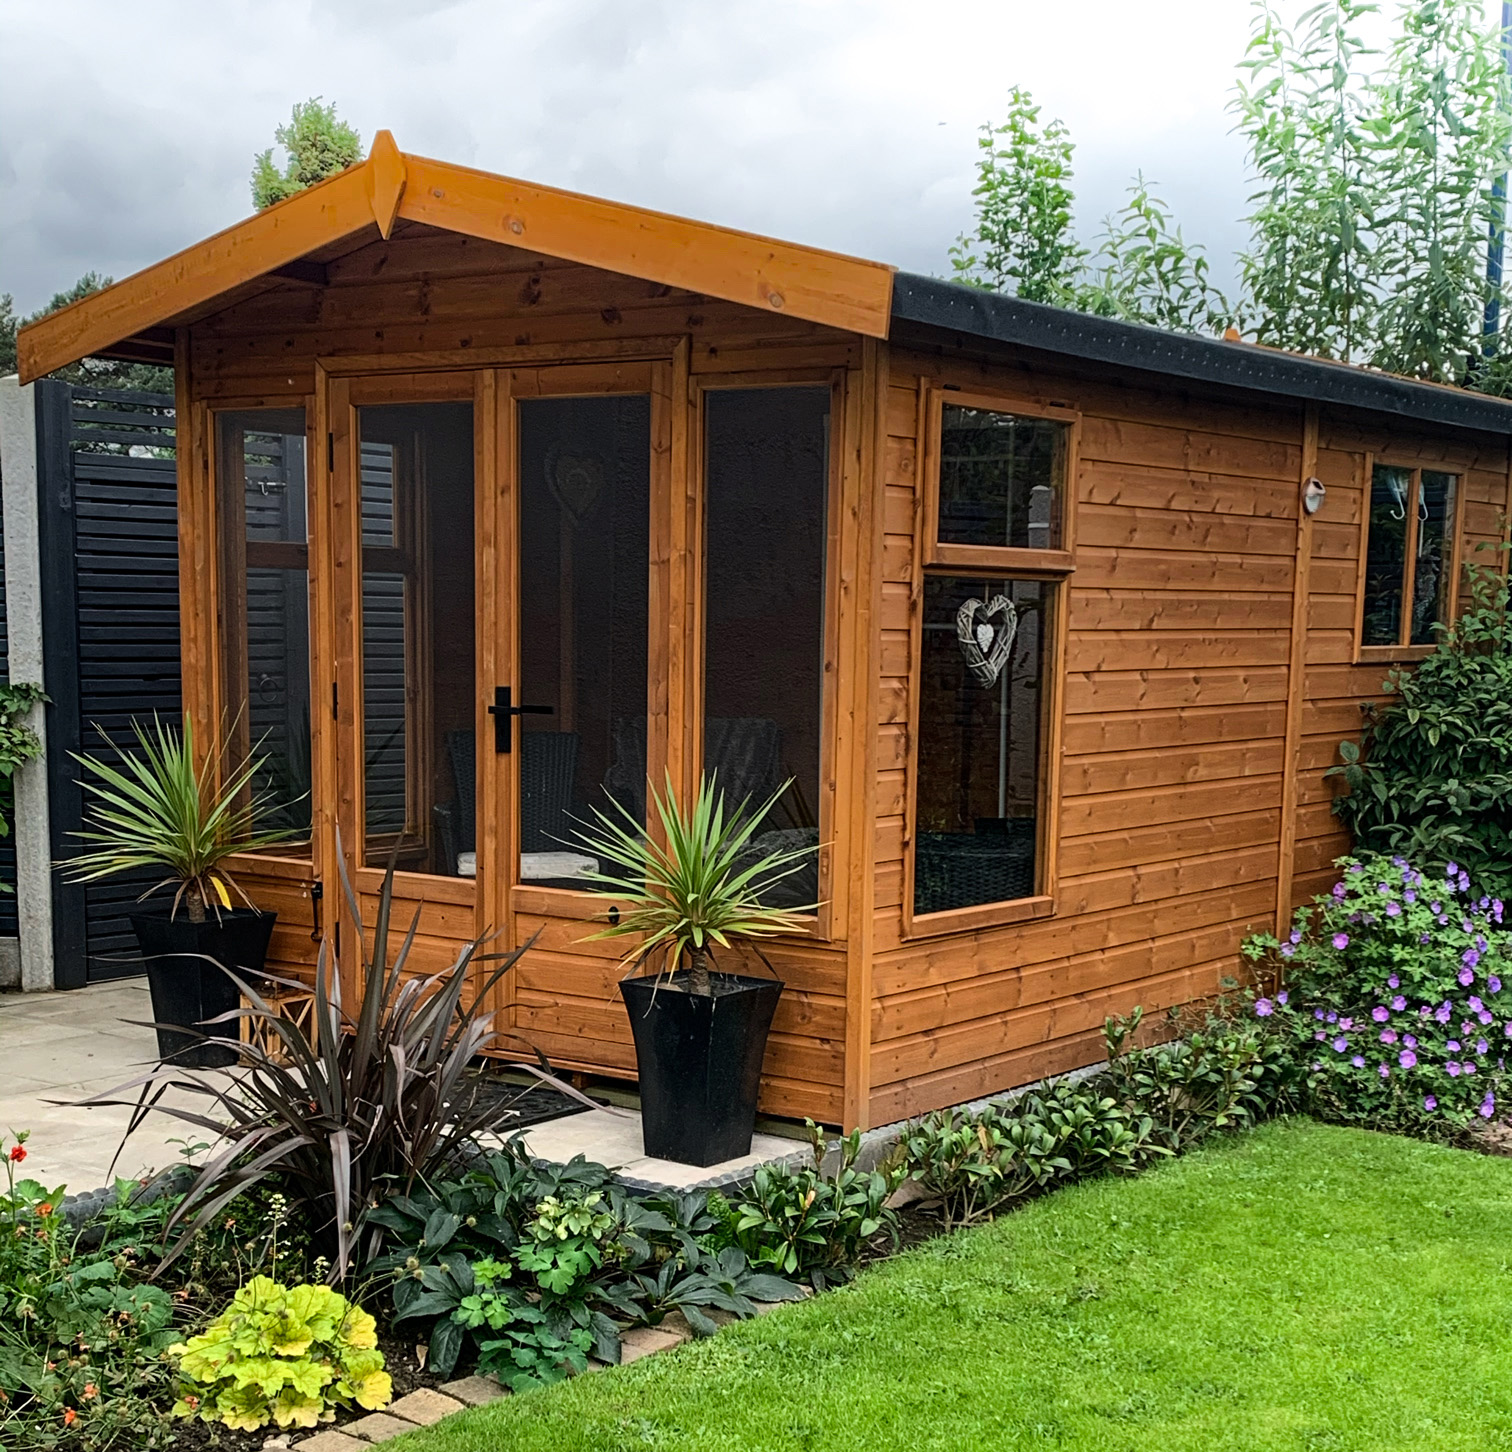 Tenbury summerhouse apex roof. An ideal way to create a family garden